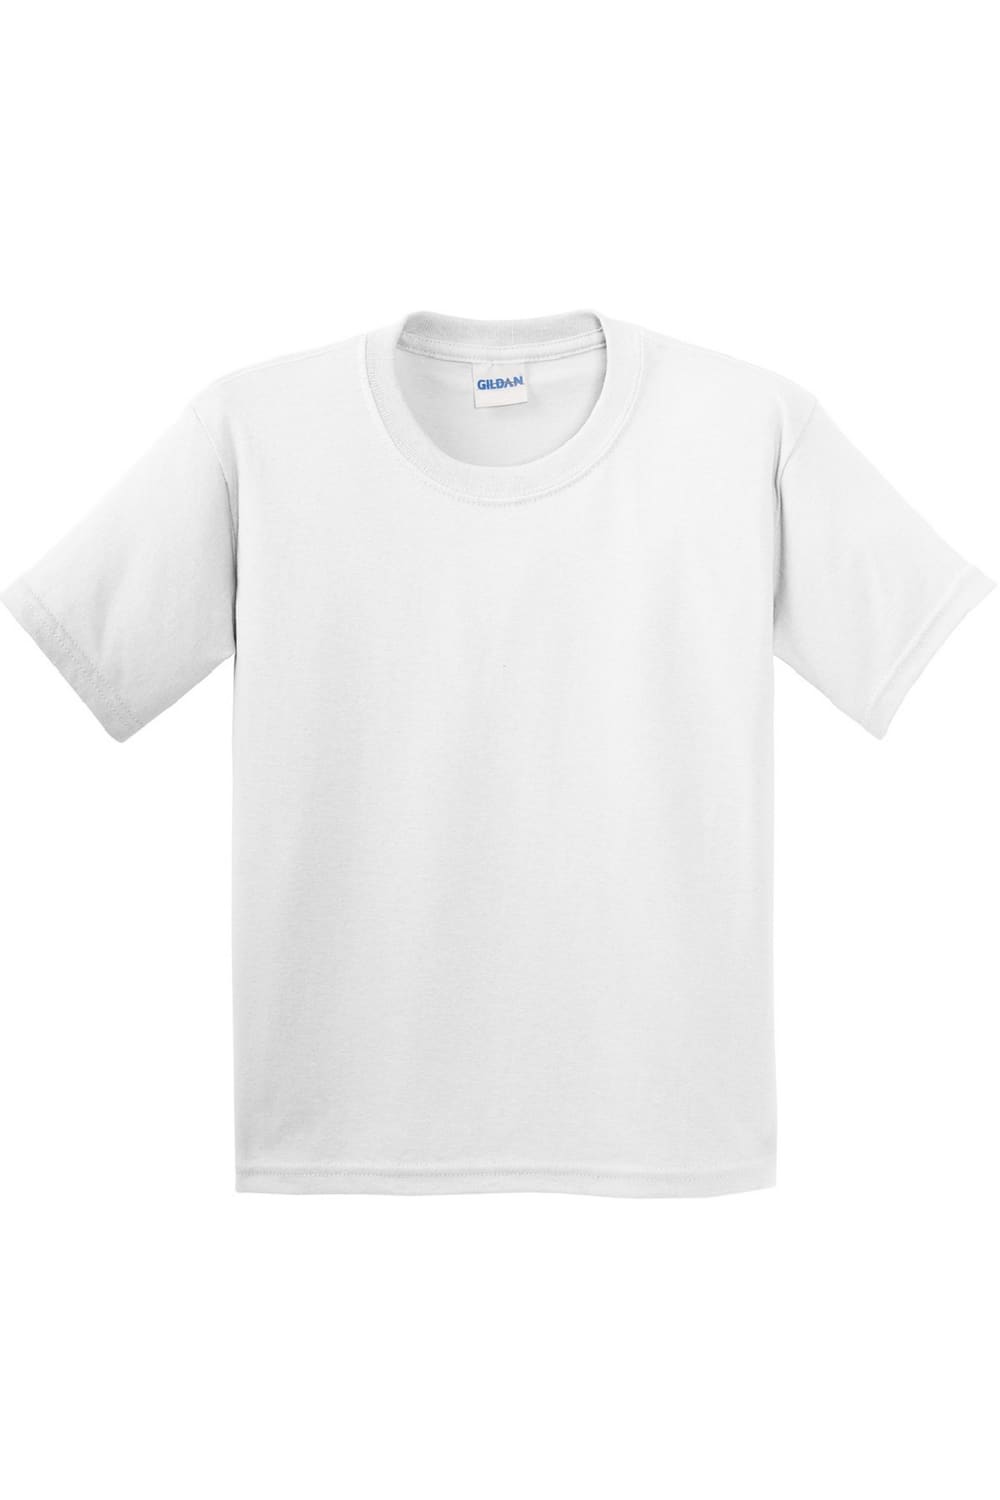 Gildan Childrens Unisex Soft Style T-Shirt (White)